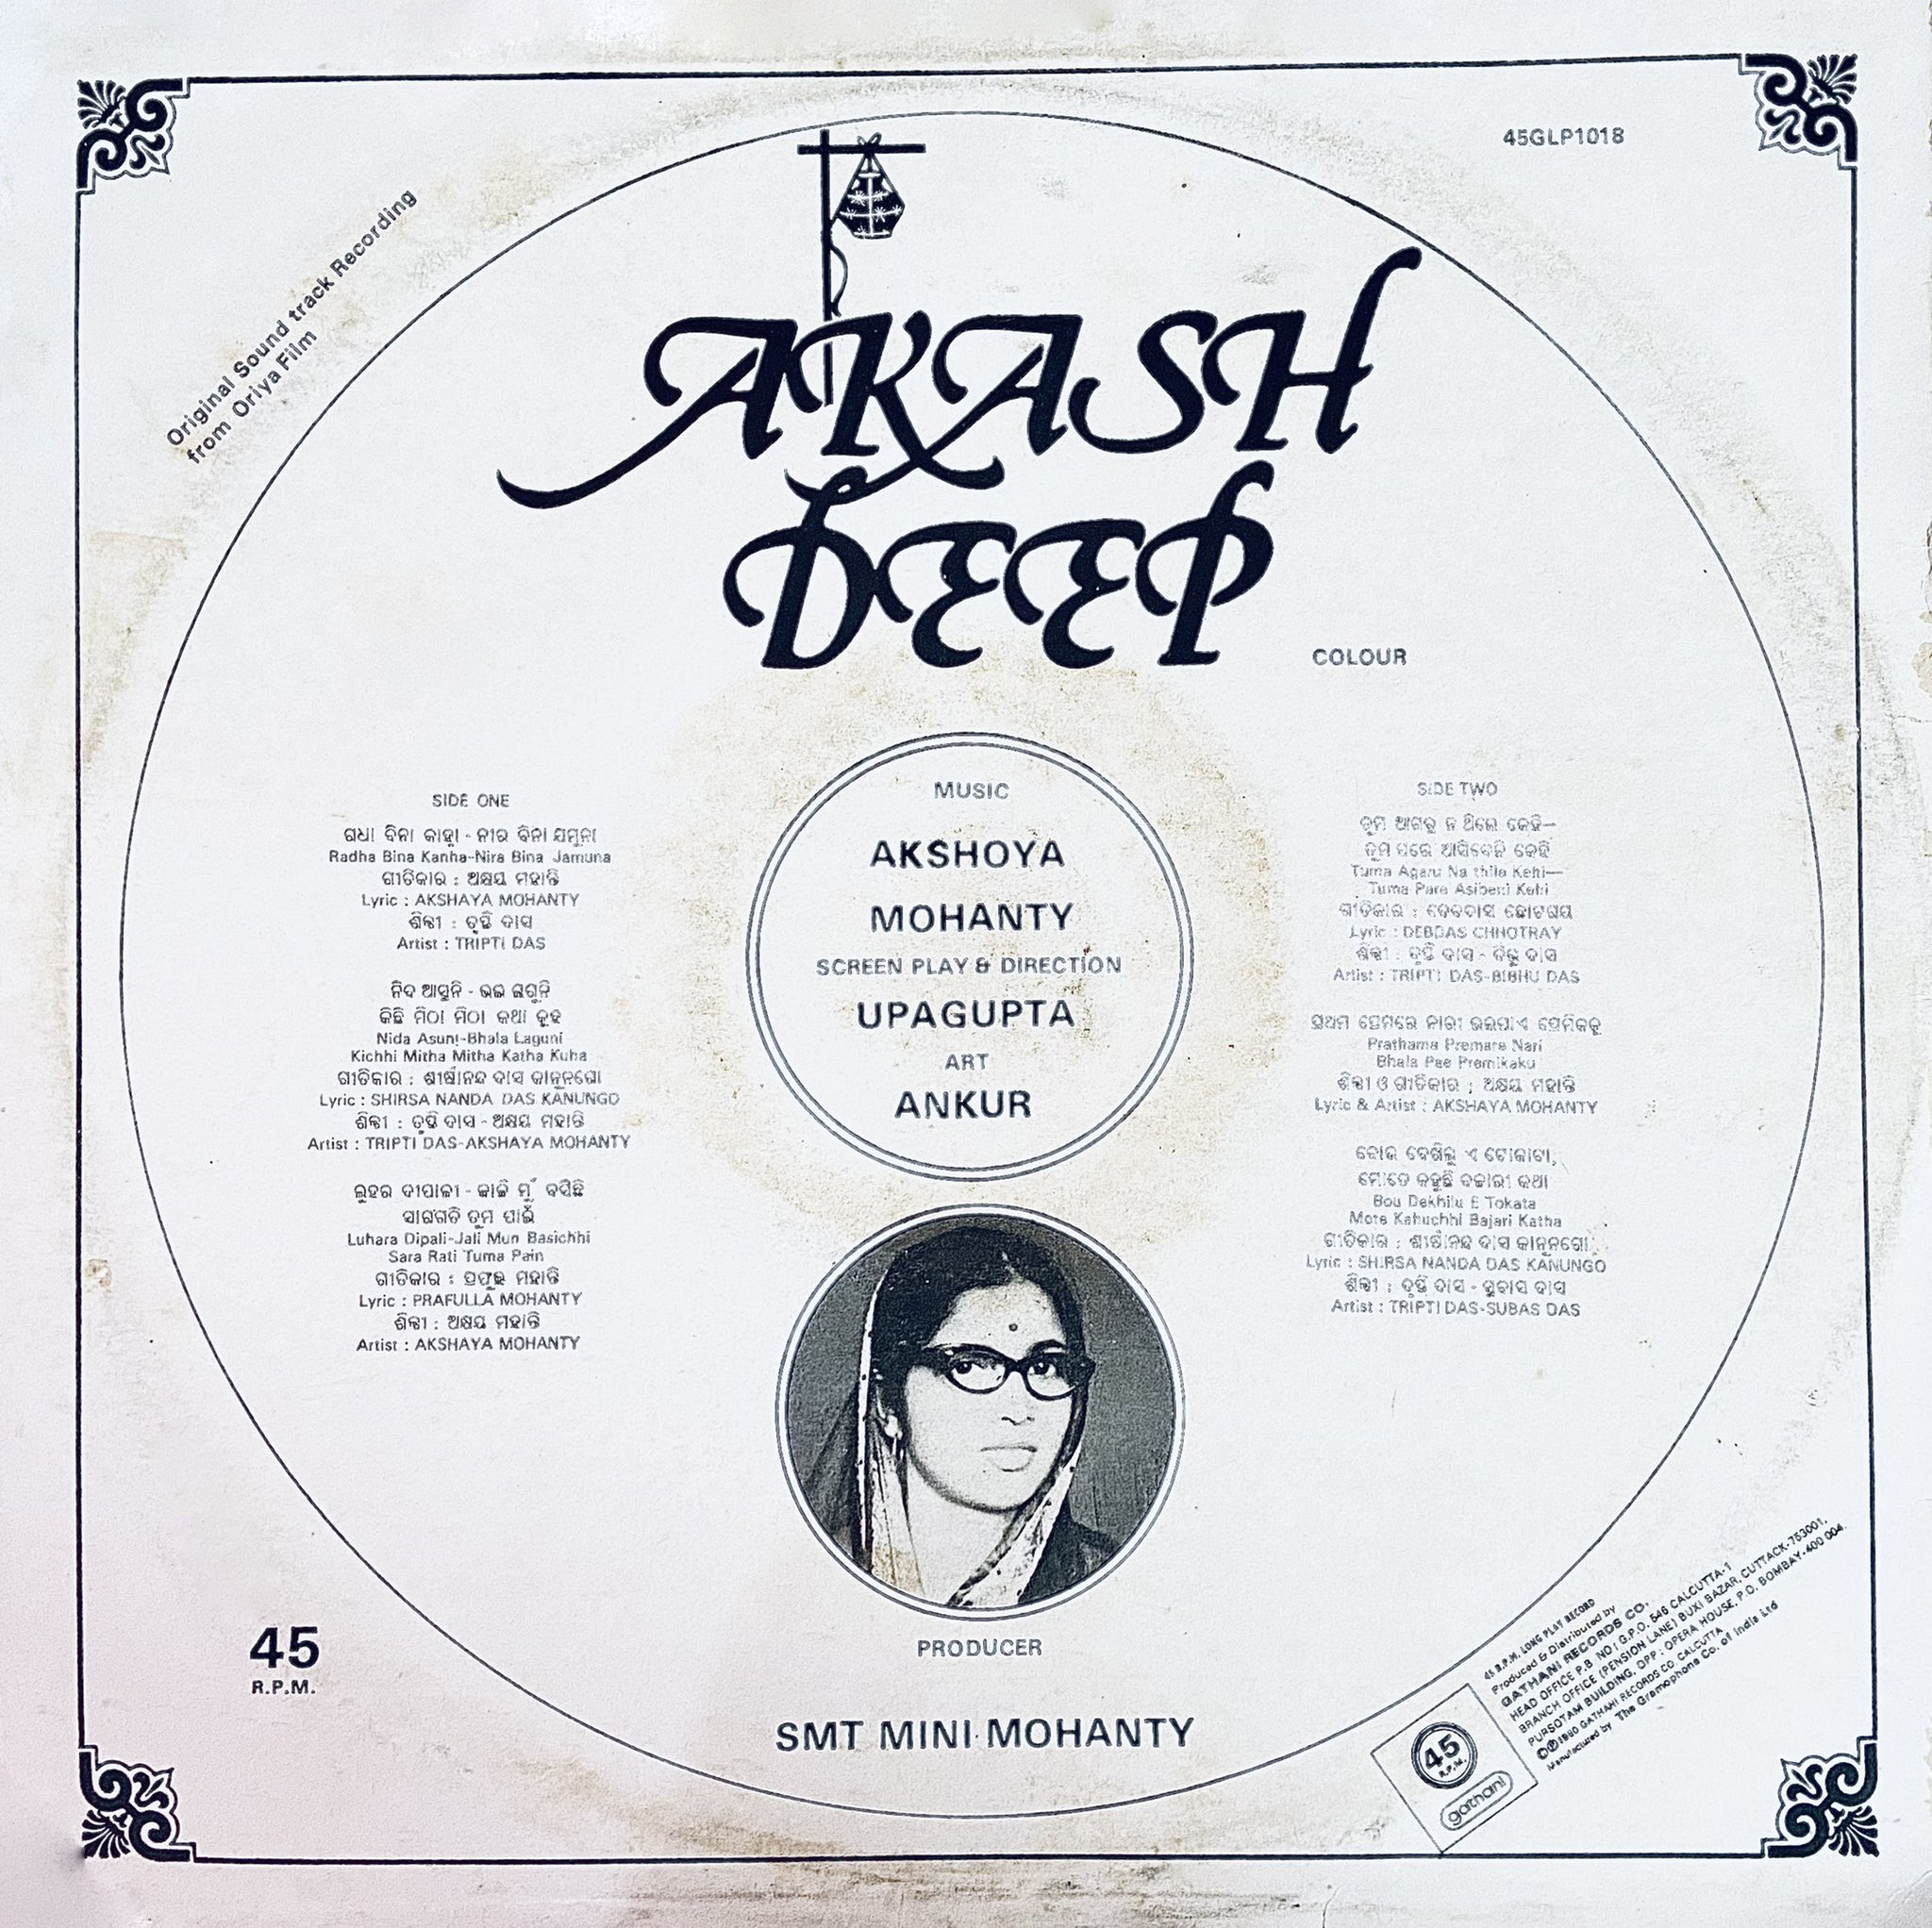 'Akash Deep' record cover (back)